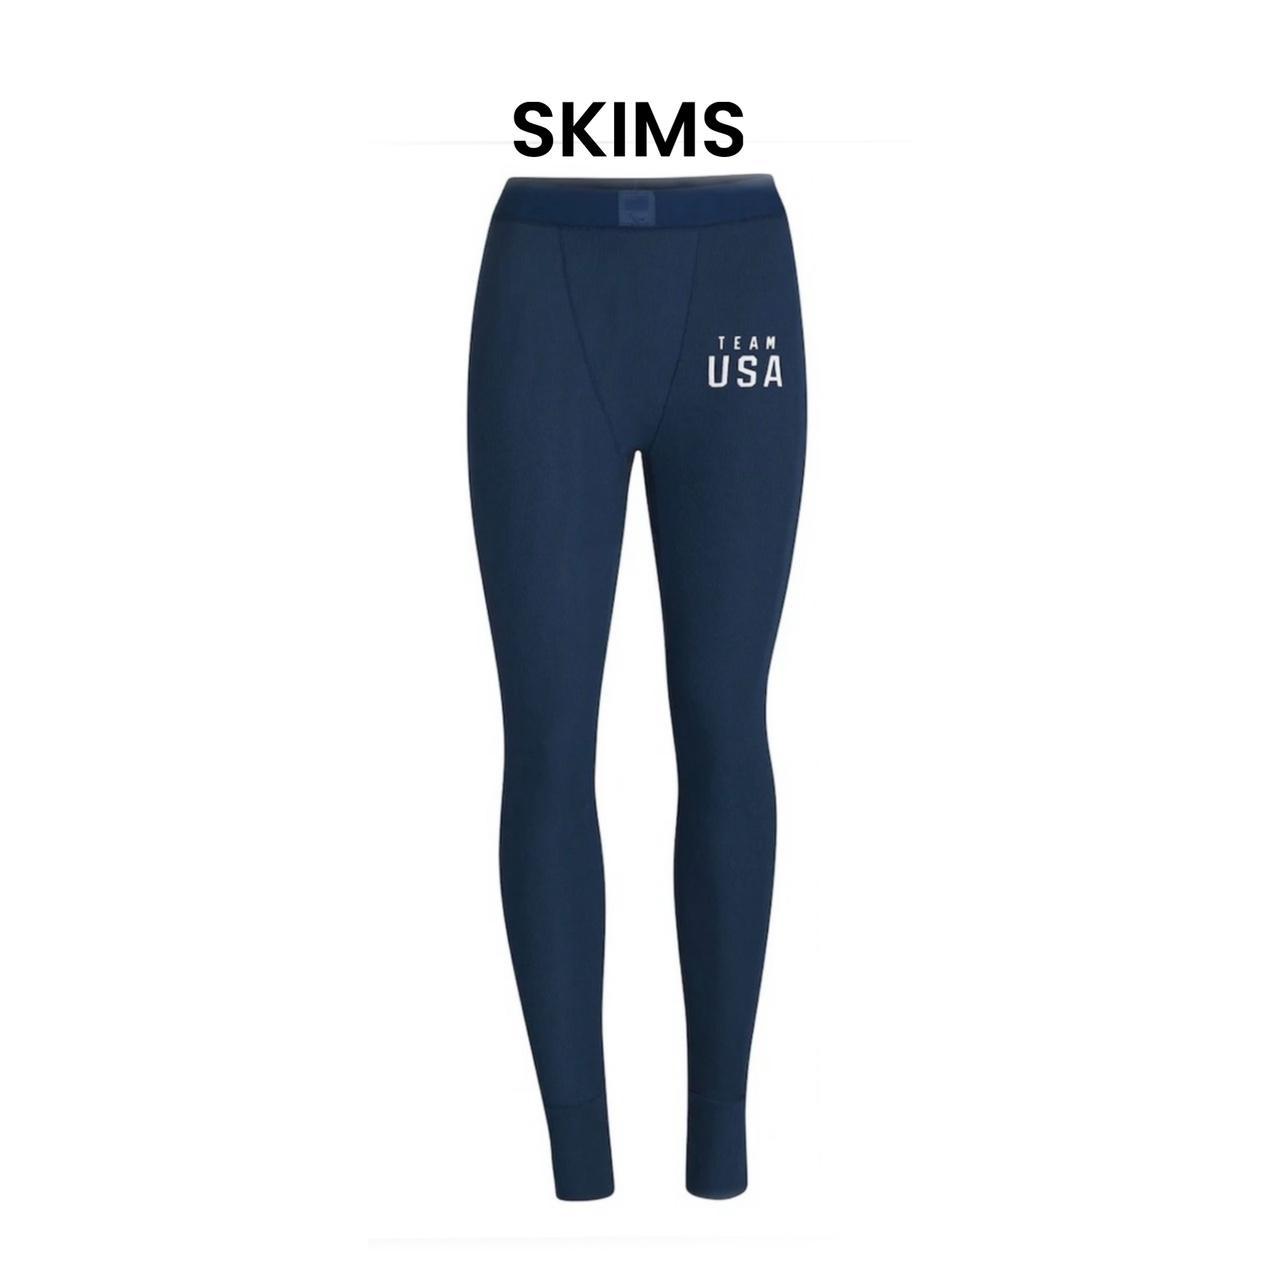 SKIMS Leggings & Tights - Women